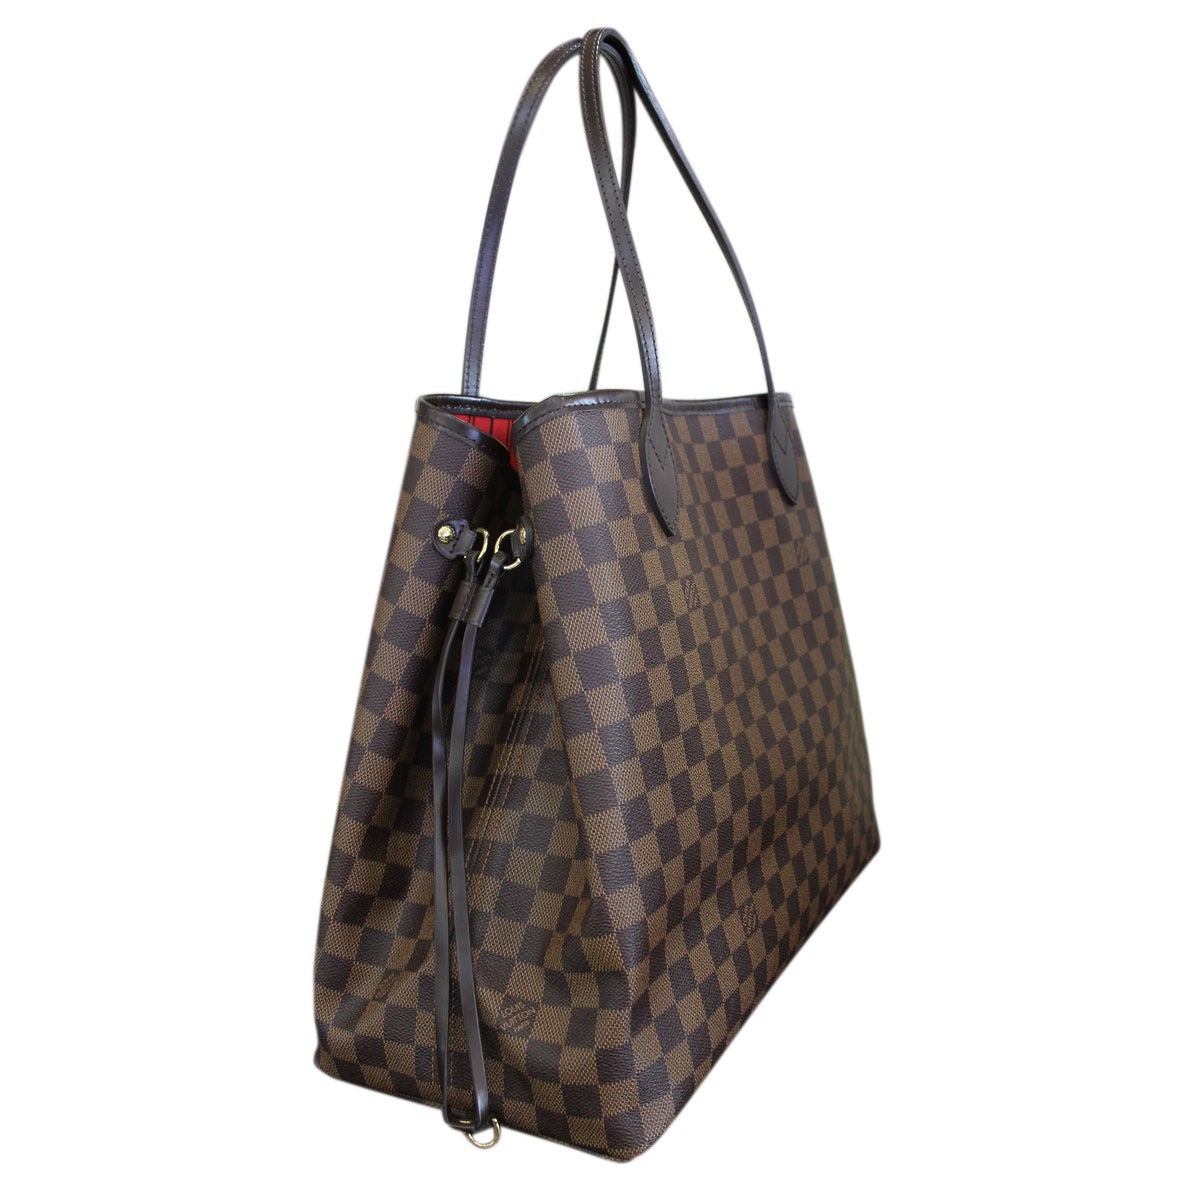 Louis Vuitton Neverfull GM Damier Ebene Tote Handbag in Box at 1stdibs